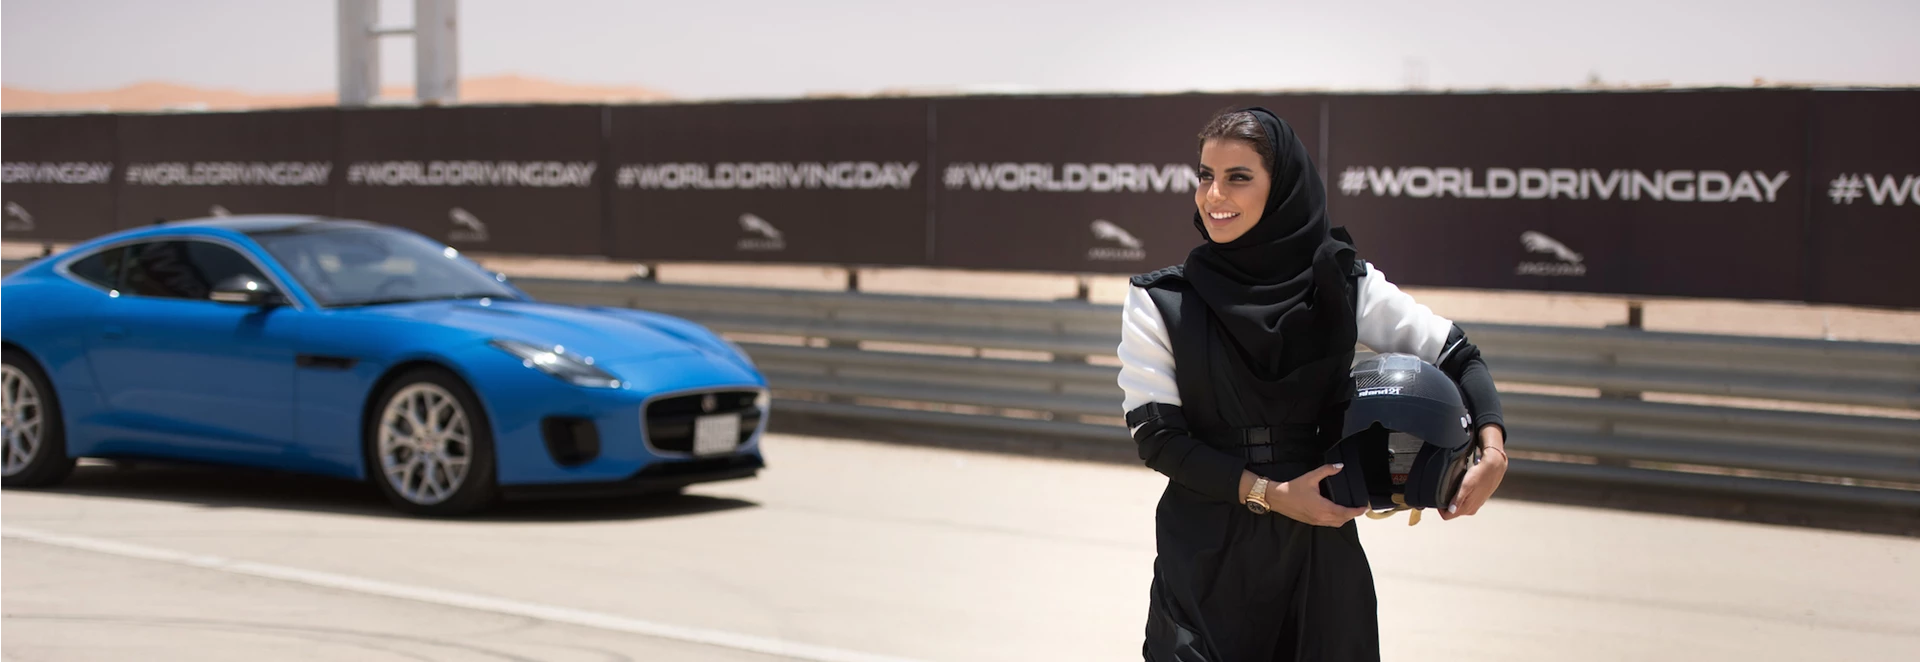 Female Saudi racer takes Jaguar F-Type for historic lap ahead of driving ban lift